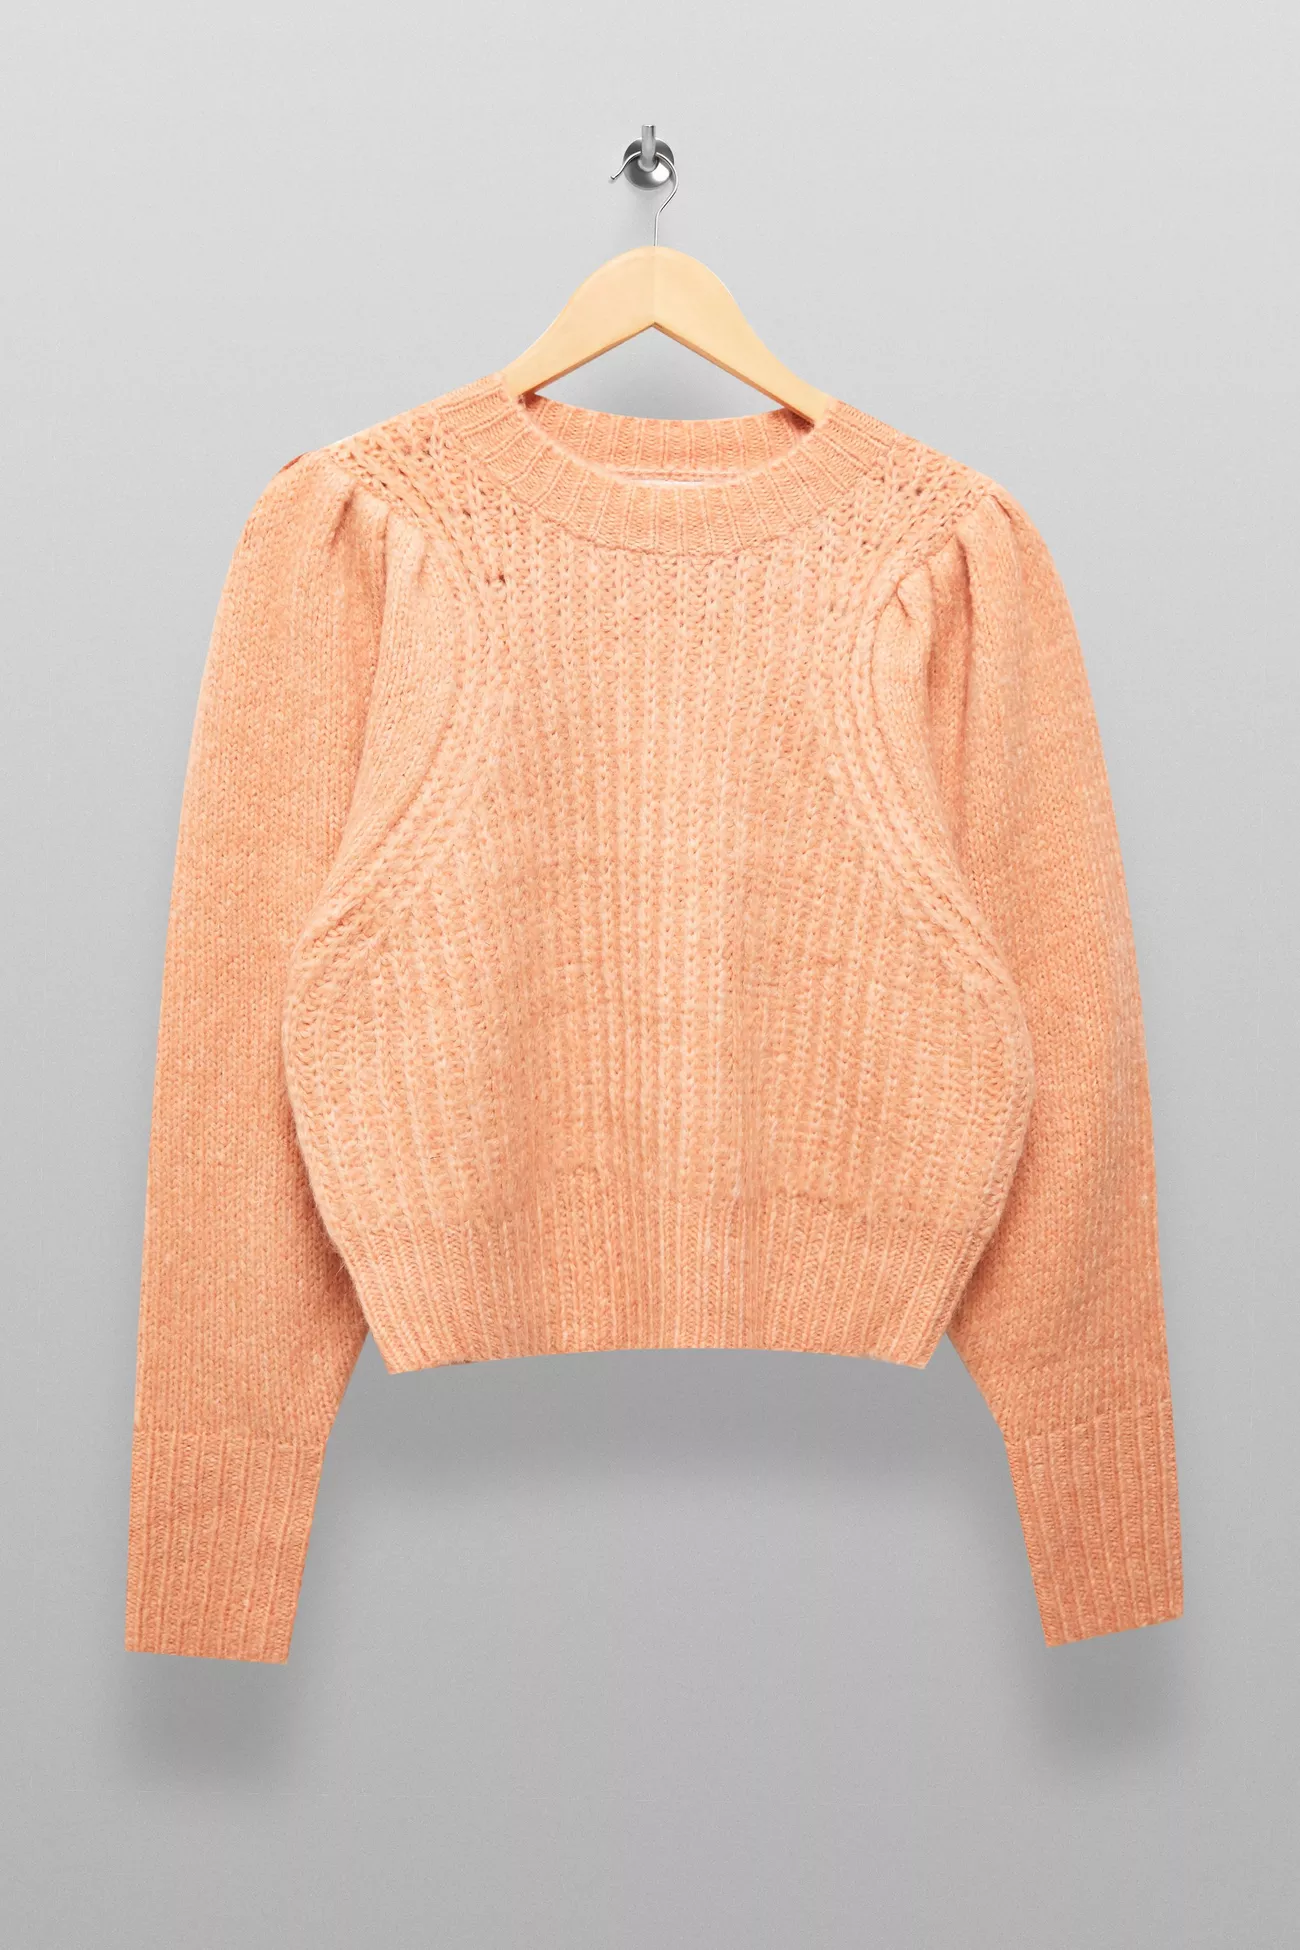 tangerine sweater topshop